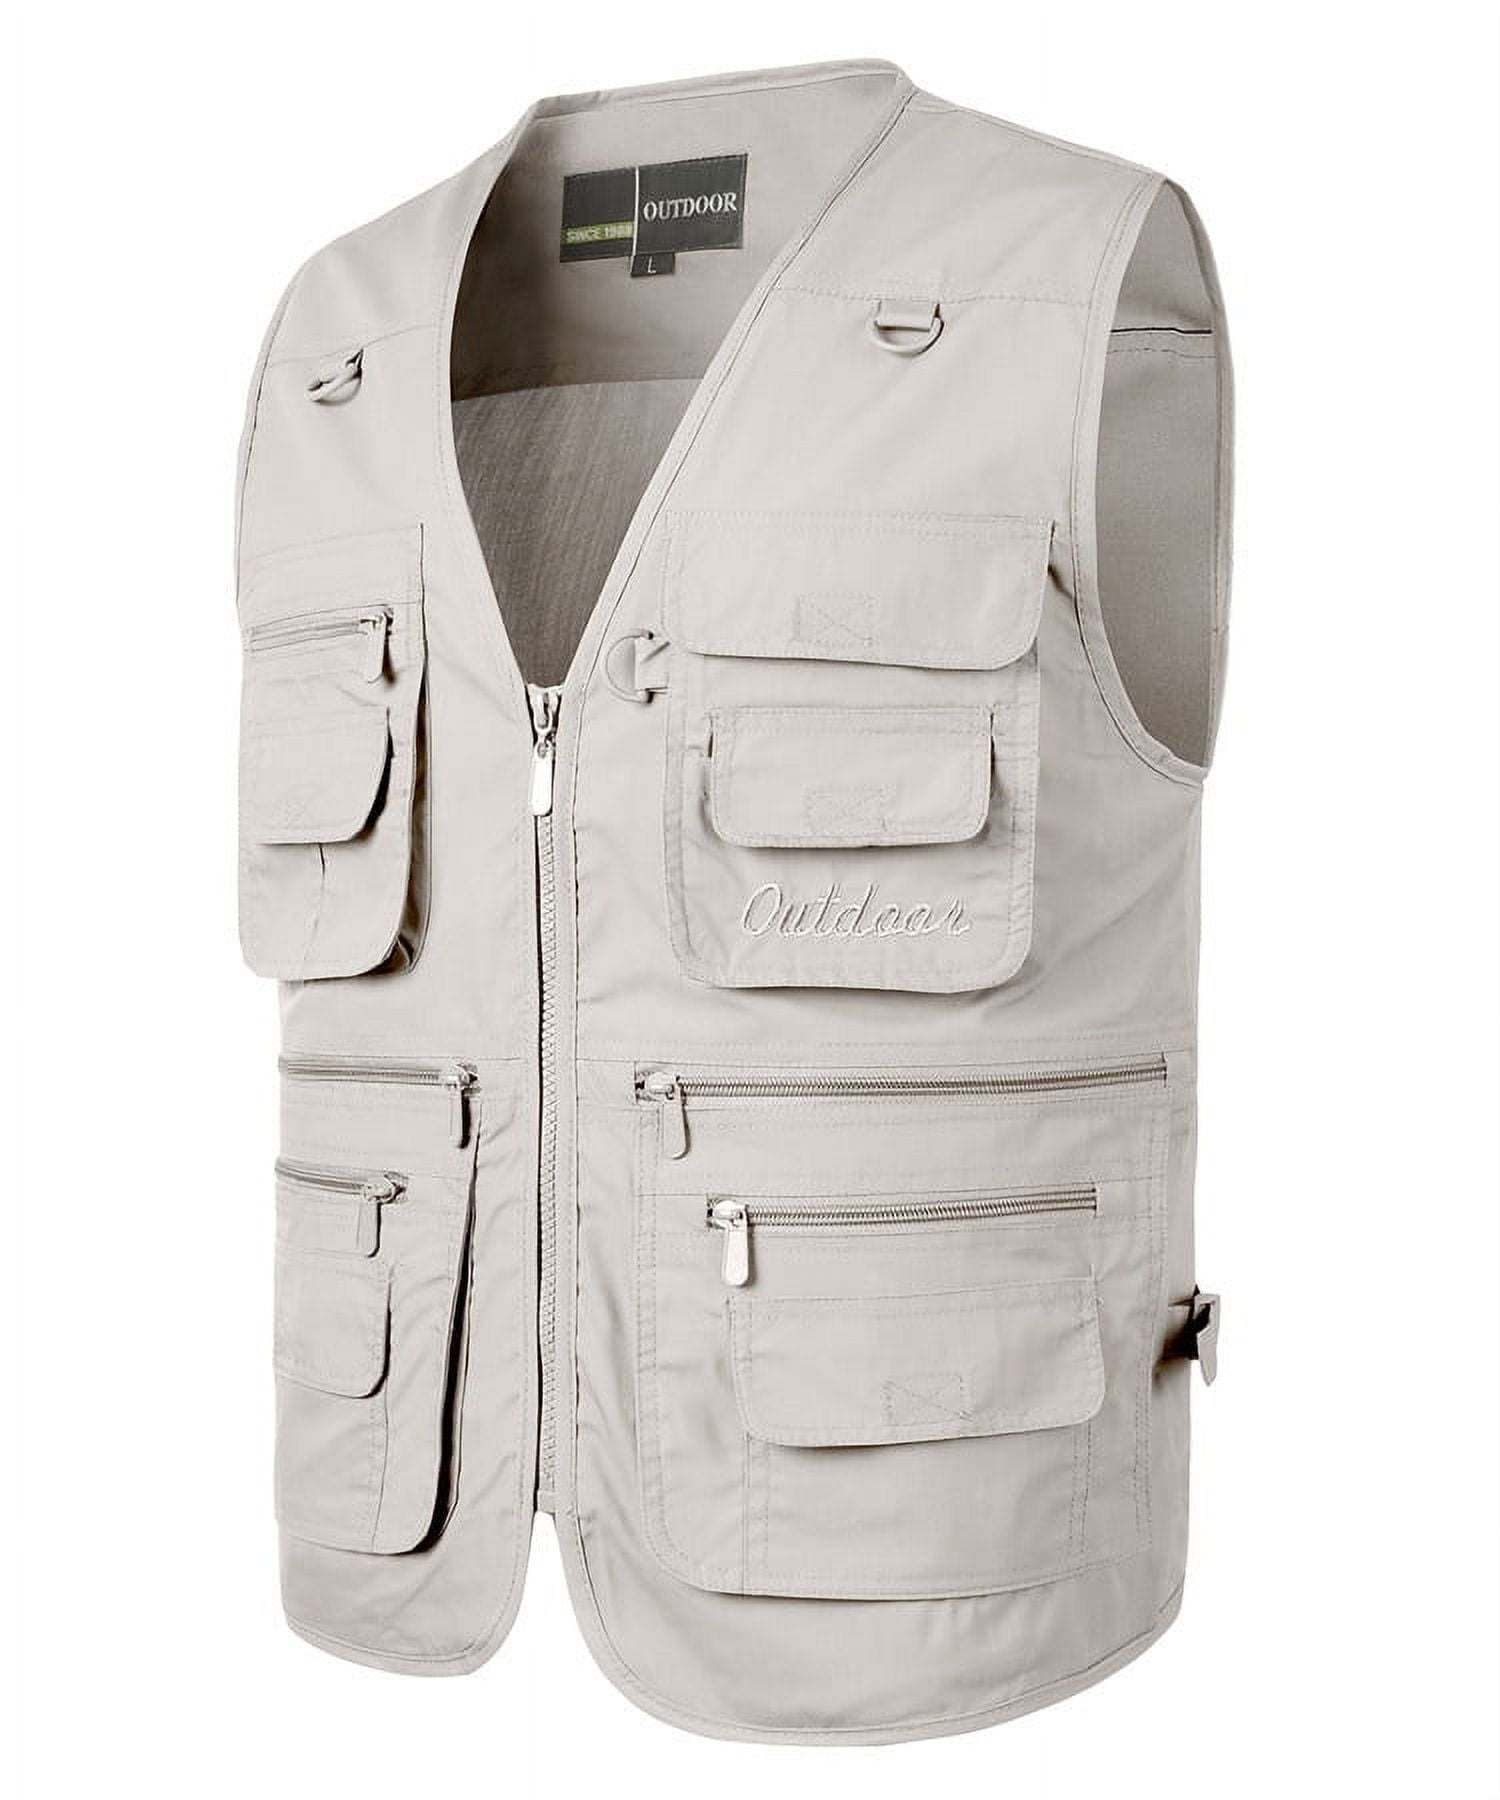 Men's Vest Sleeveless Jacket with Many Practical Pockets Outdoor Vest  Cotton Fishing Vest Leisure Hunting Trekking Hiking Angler Camping Safari,  Beige-L 